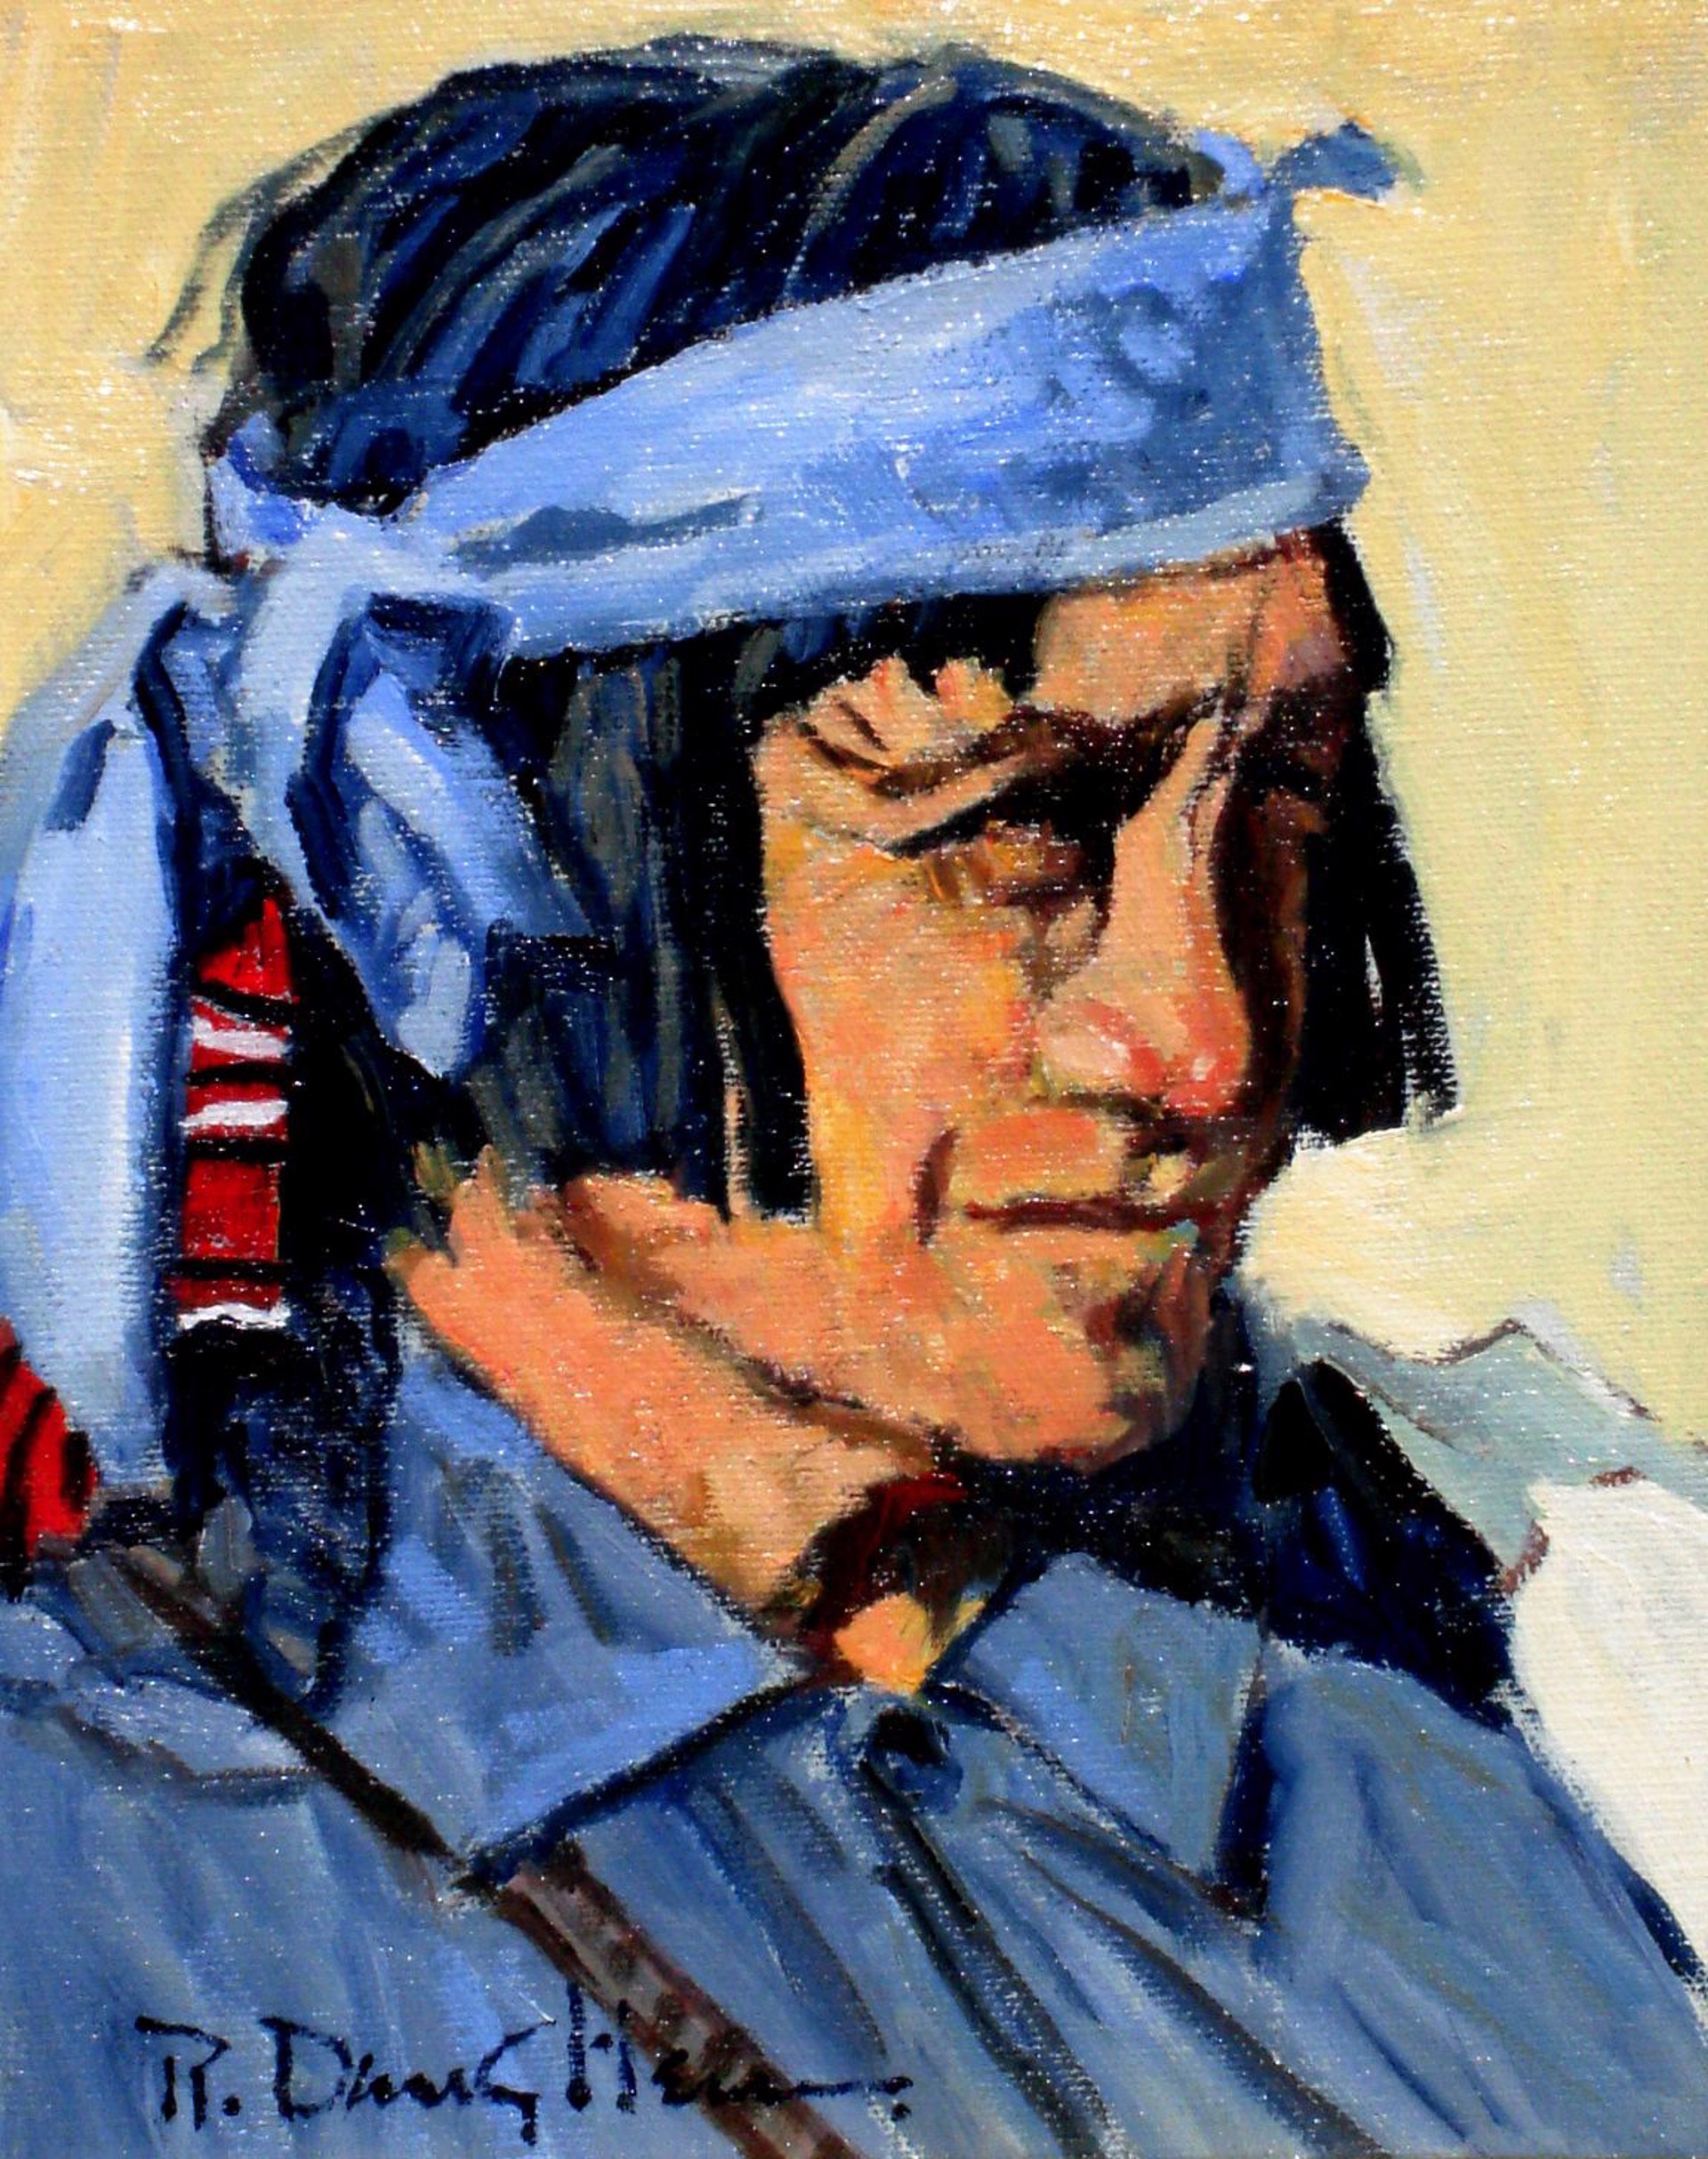 Blue Headband  (Navajo Council) by Robert Daughters (1929-2013)